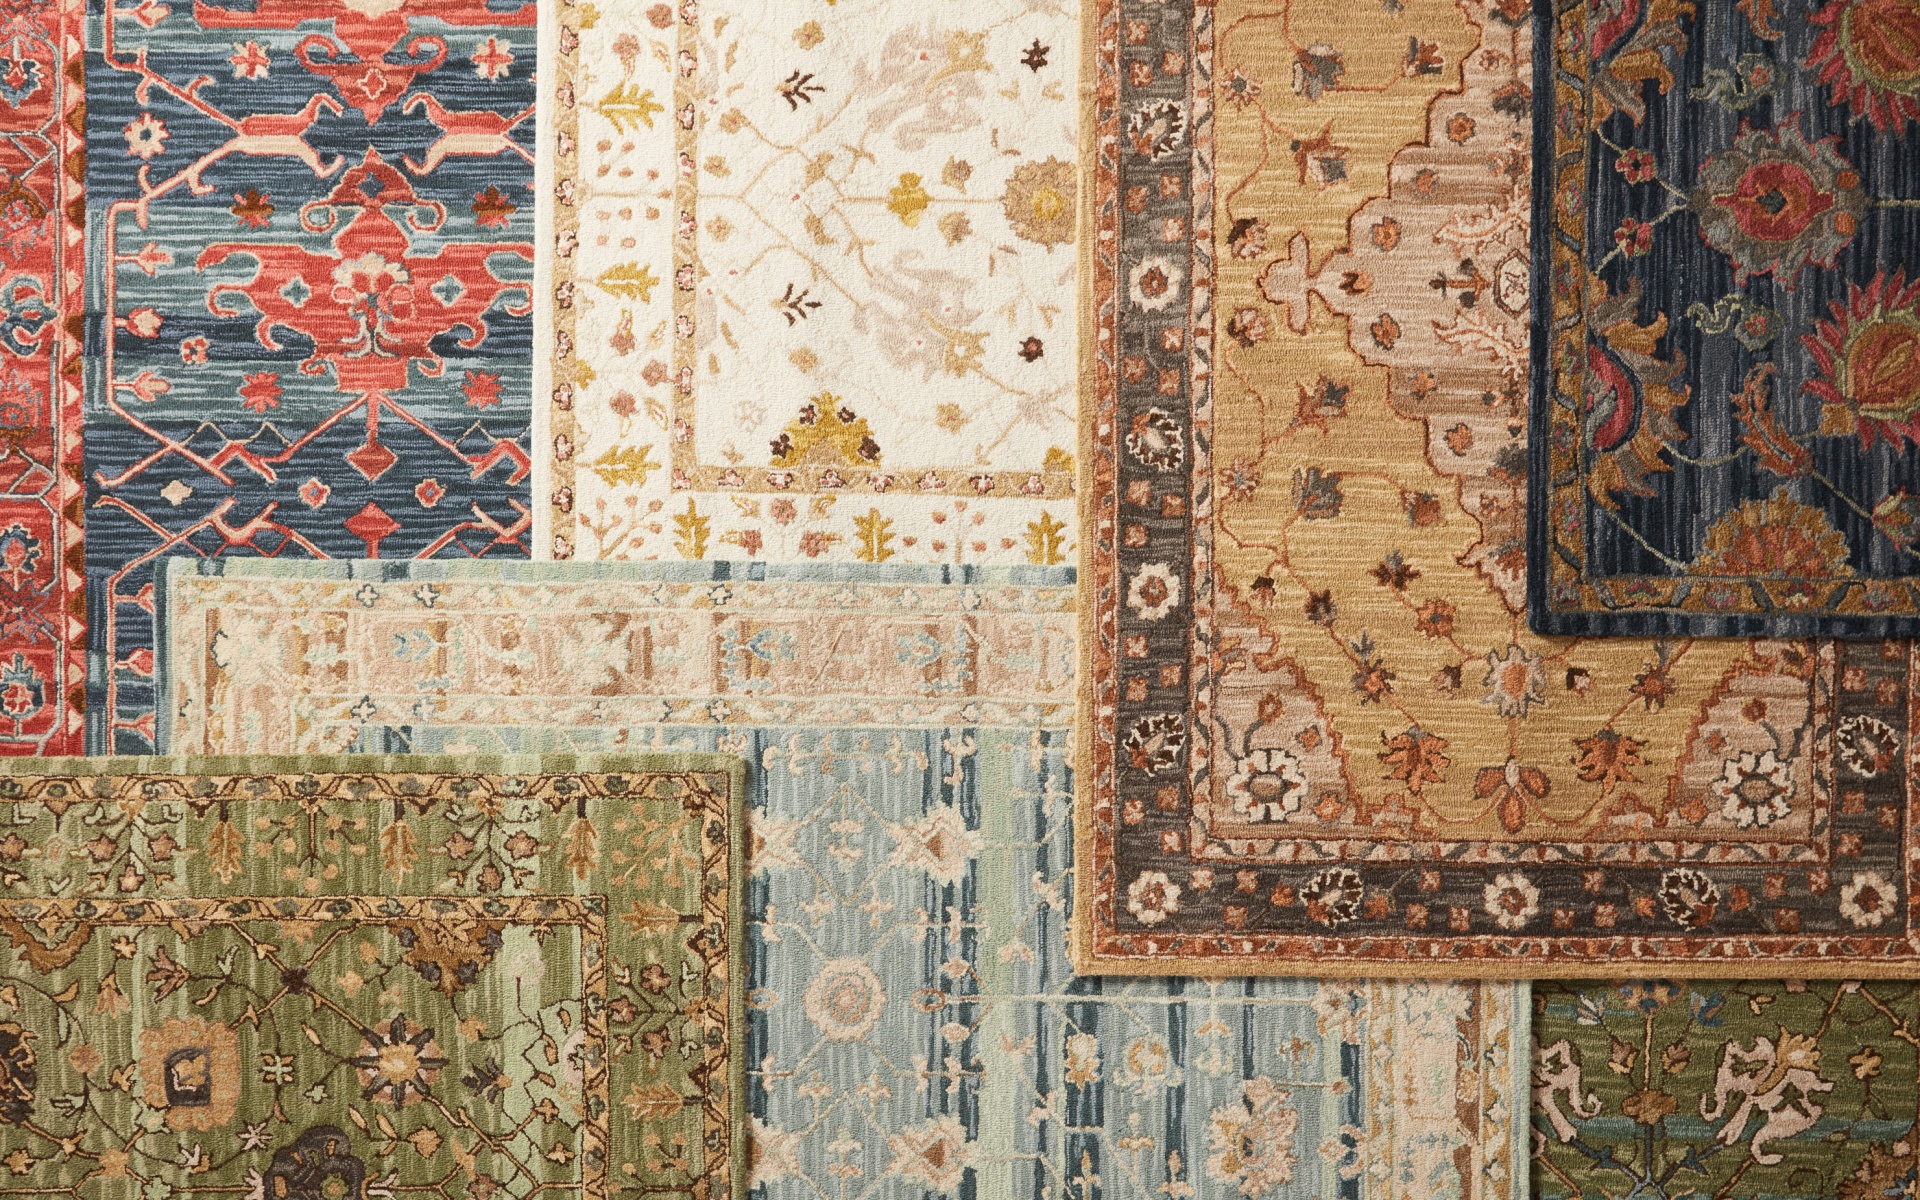 close-up of layered Persian rugs